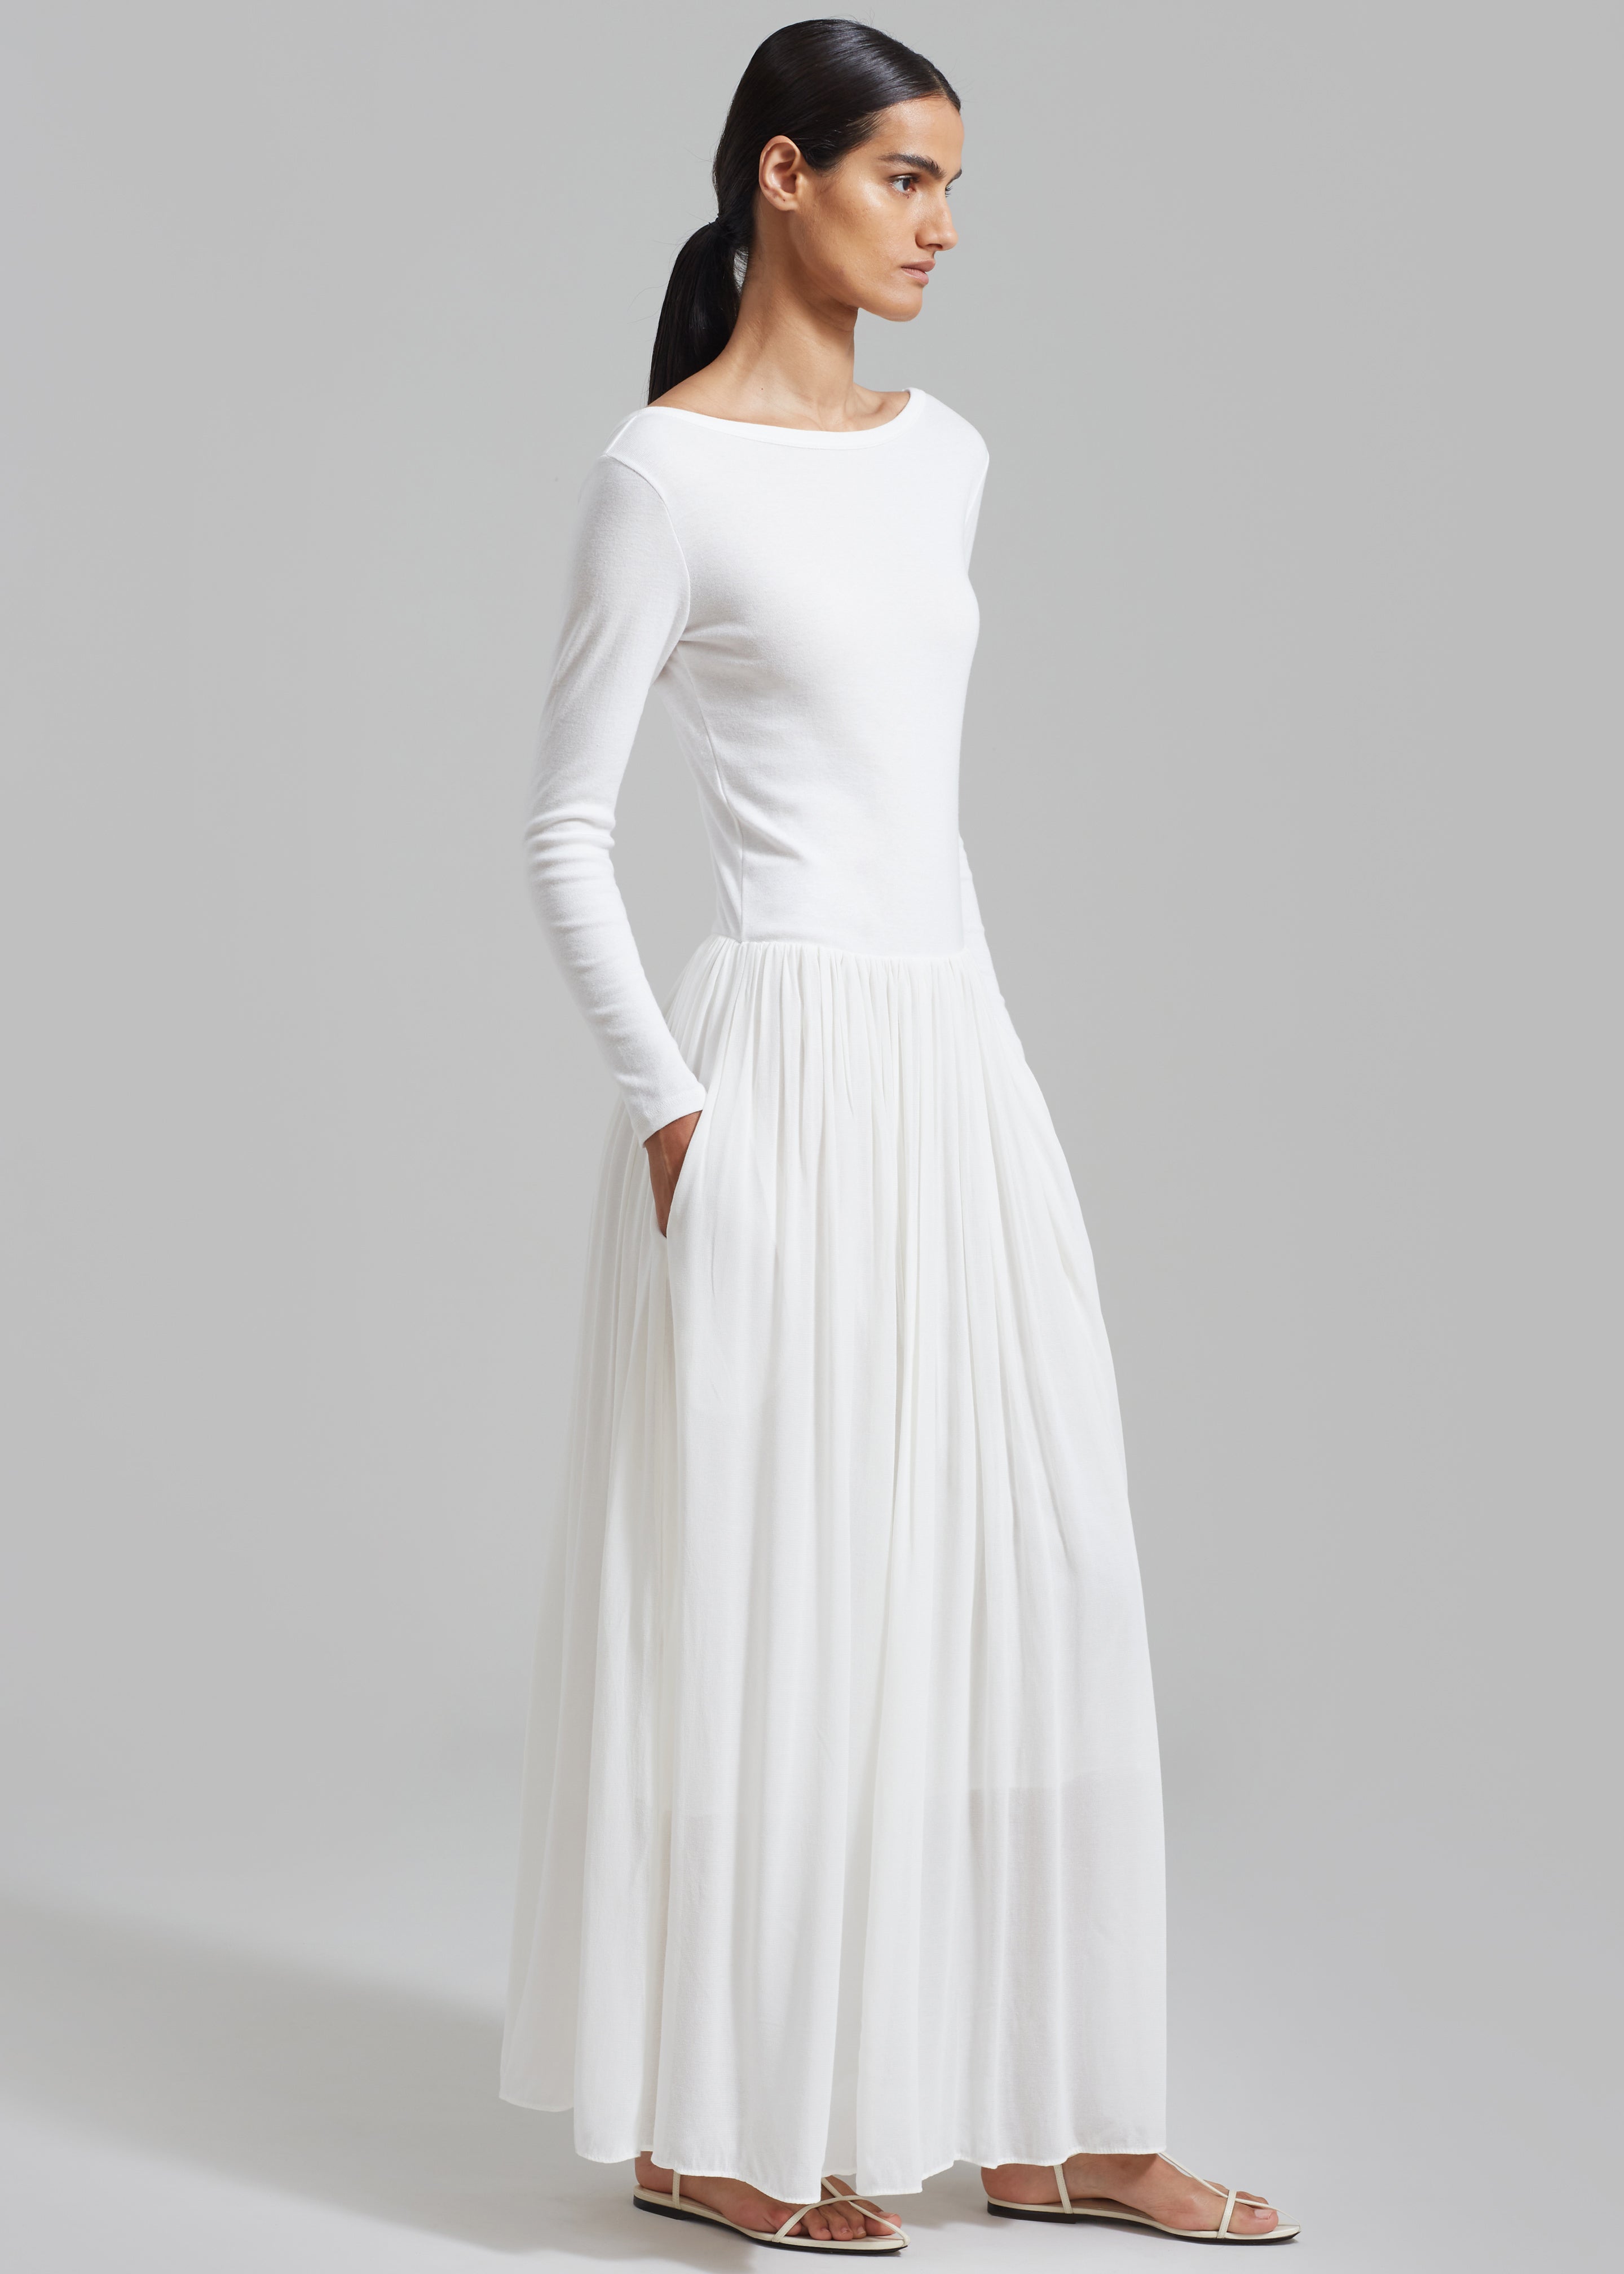 Odette Gathered Skirt Maxi Dress - White - 5